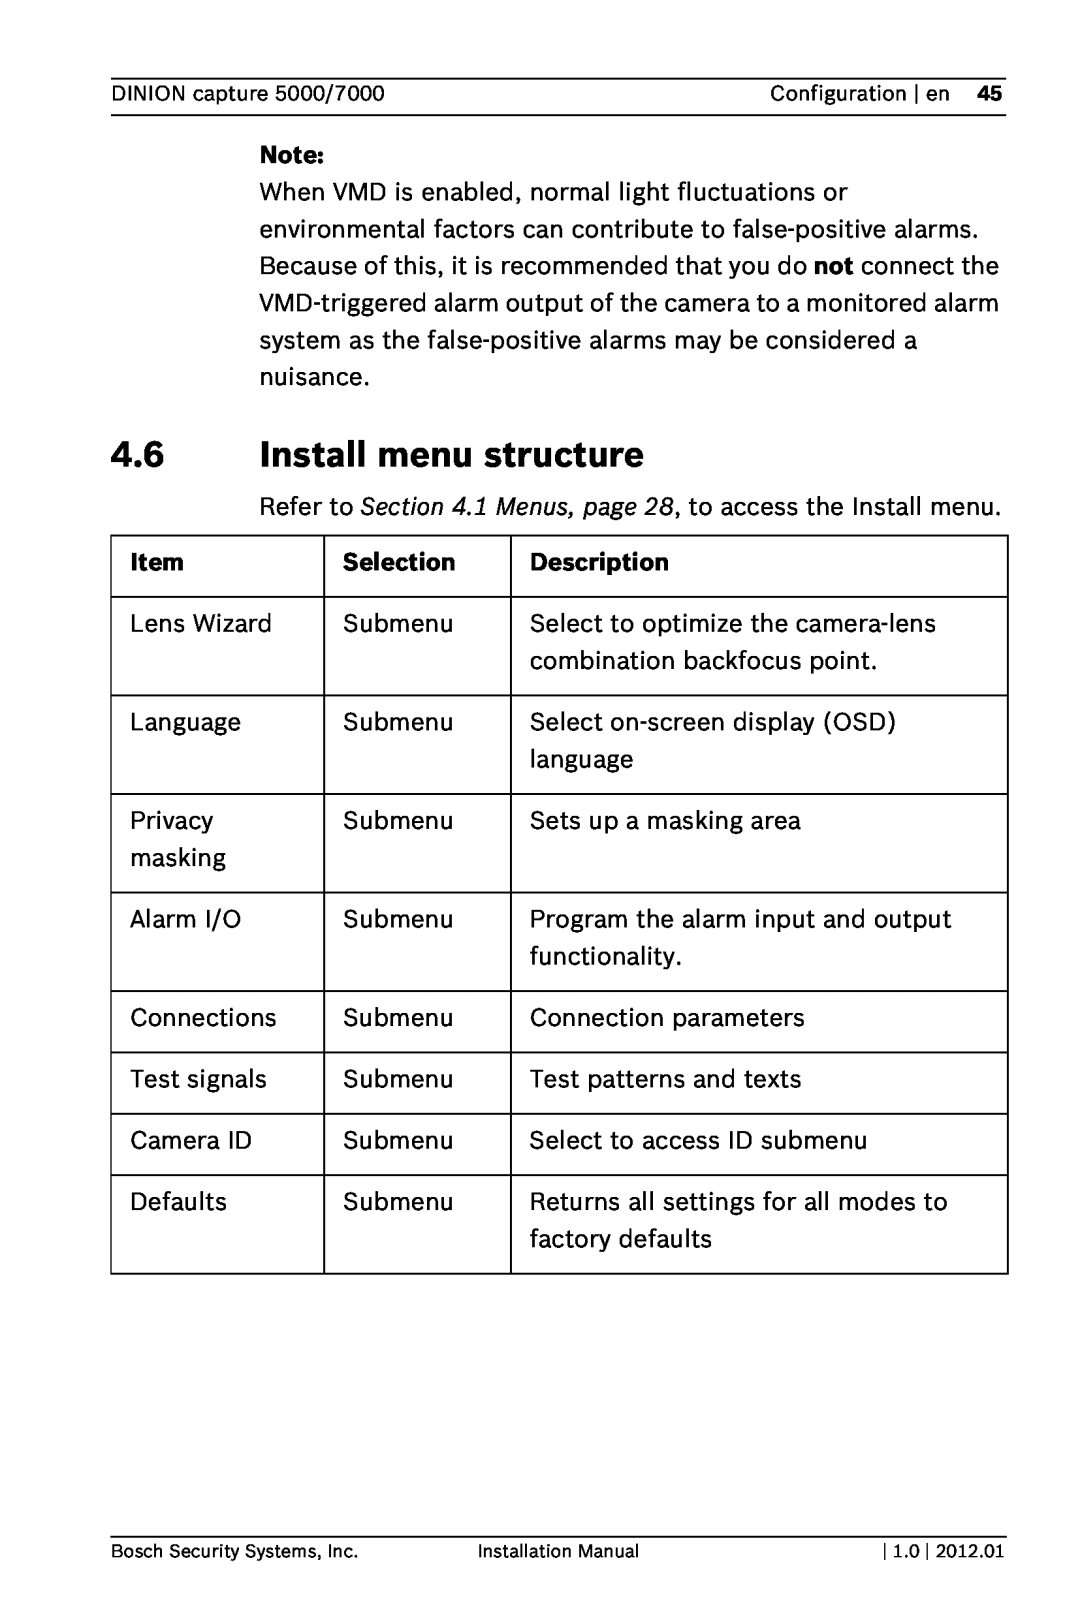 Bosch Appliances 7000, 5000 installation manual 4.6Install menu structure, Item, Selection, Description 